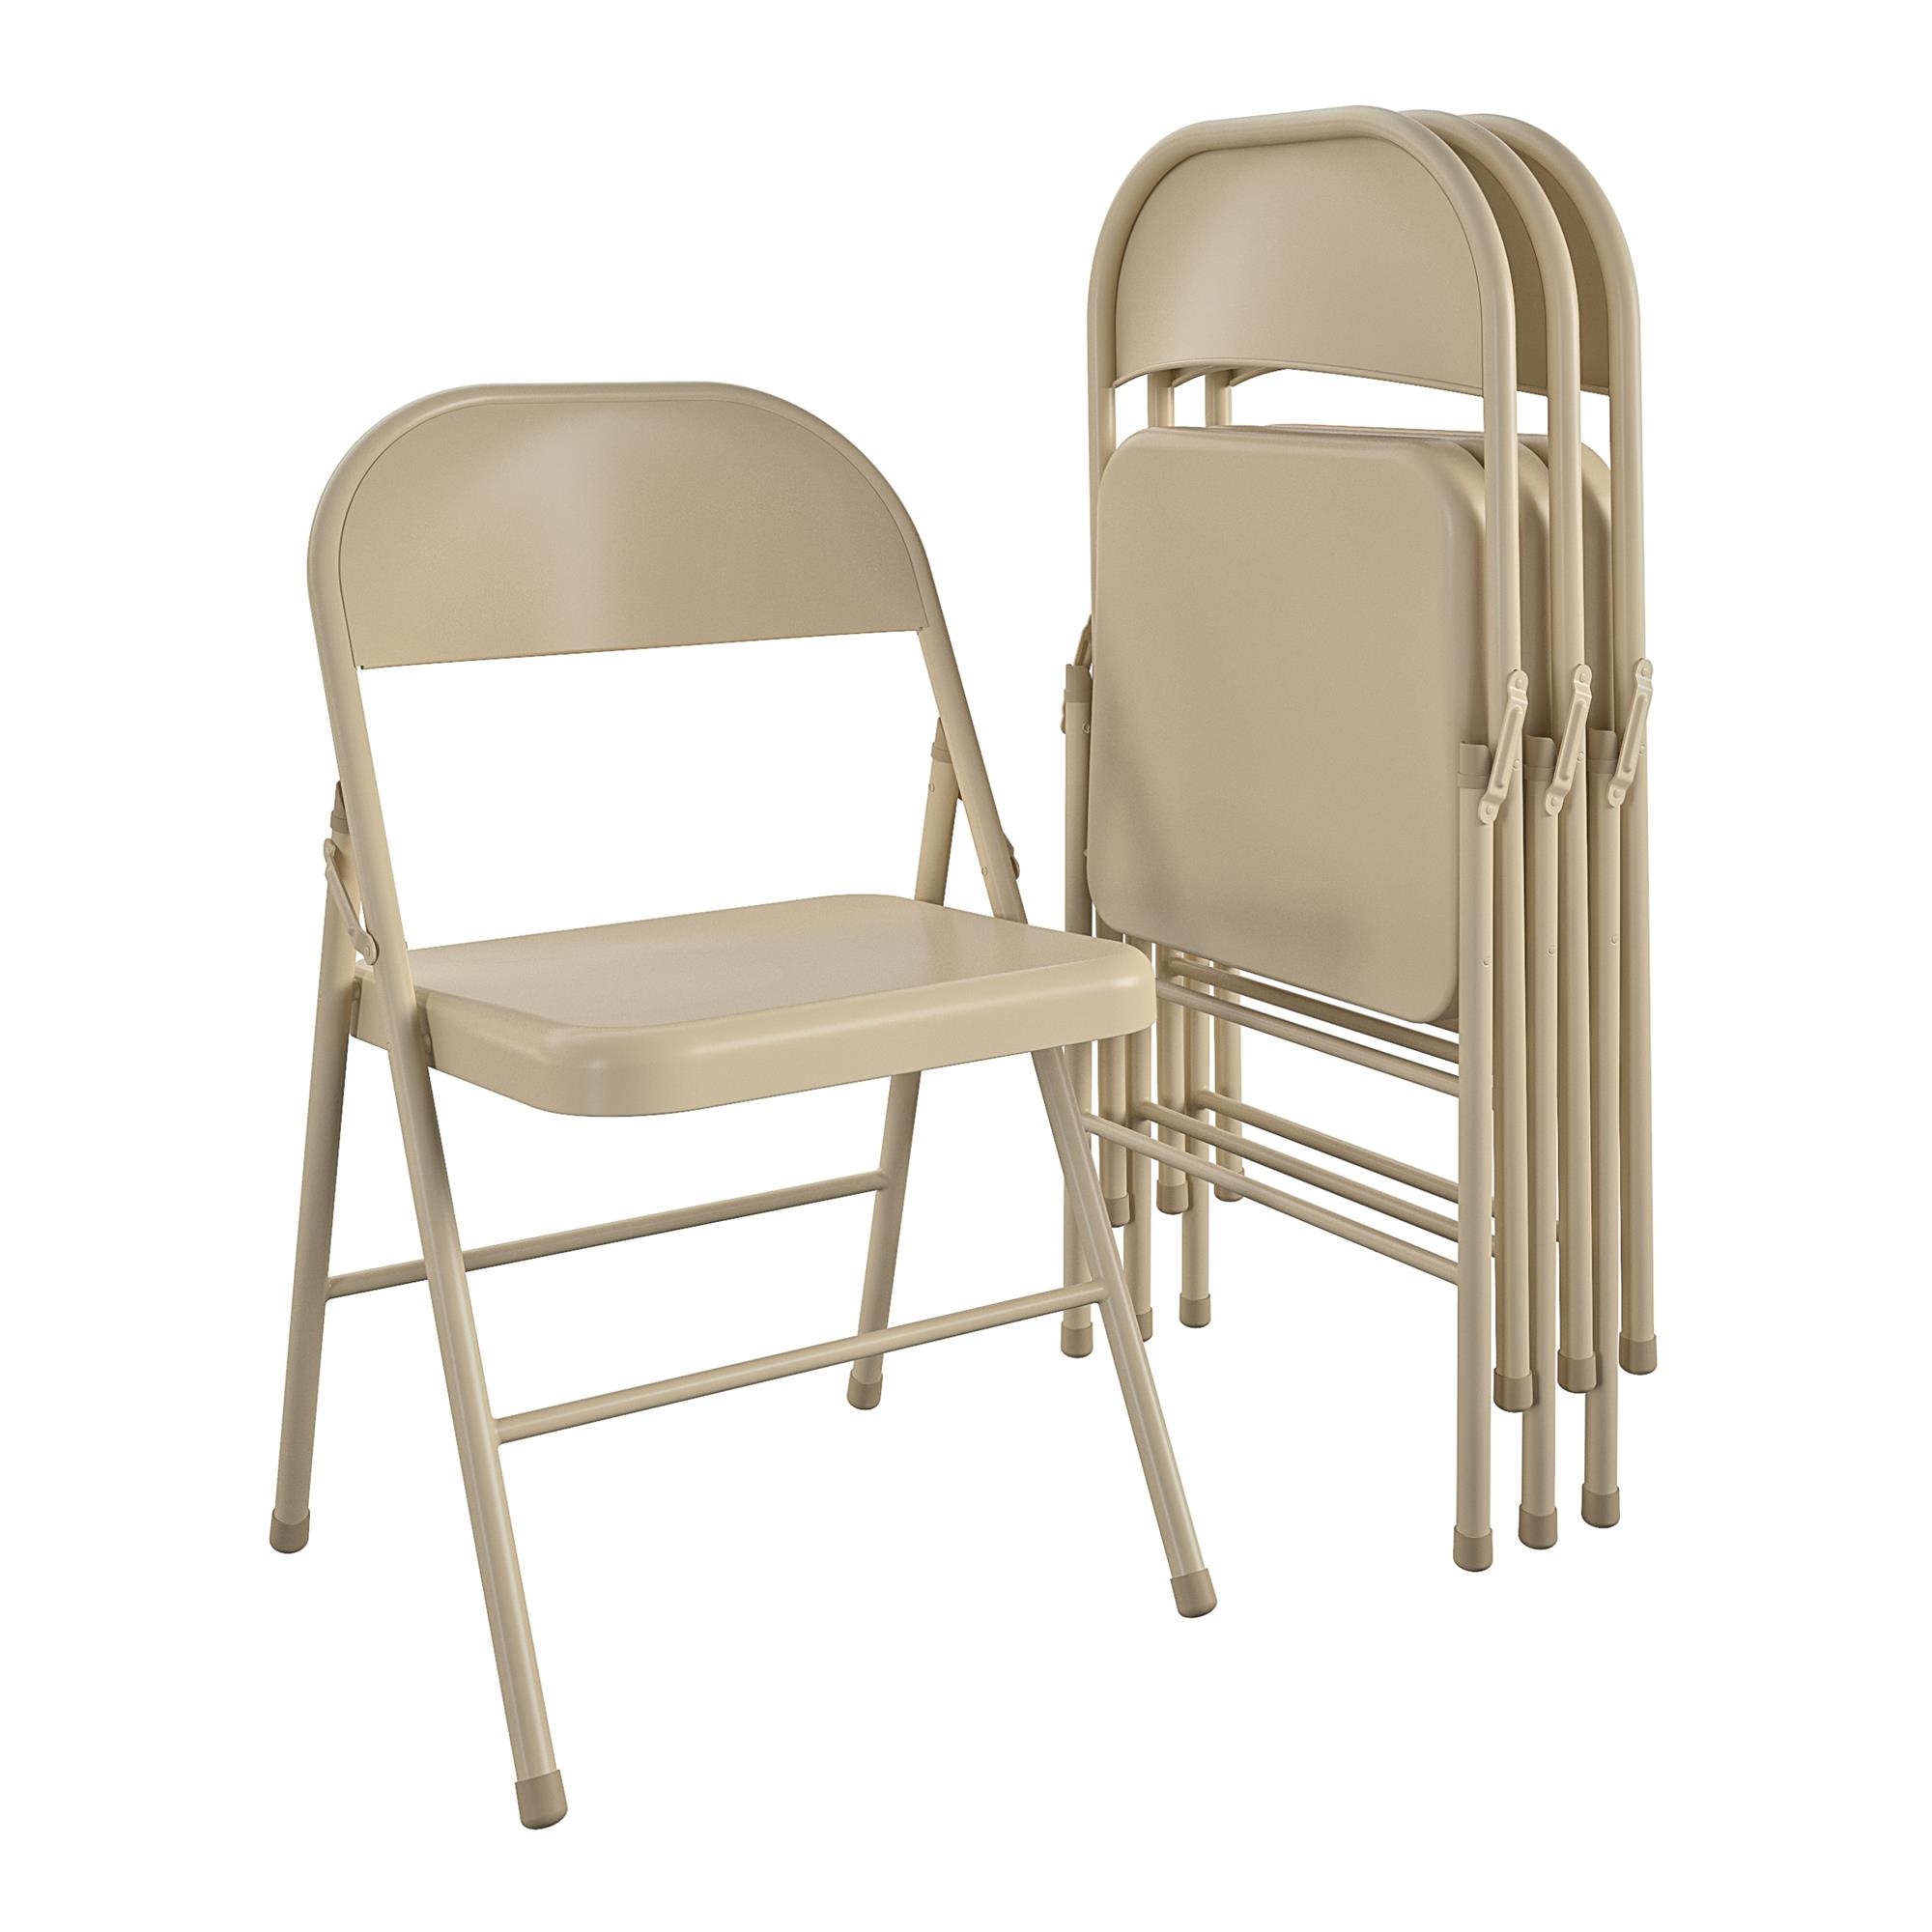 Mainstays Steel Folding Chair (4 Pack), Beige - image 1 of 10